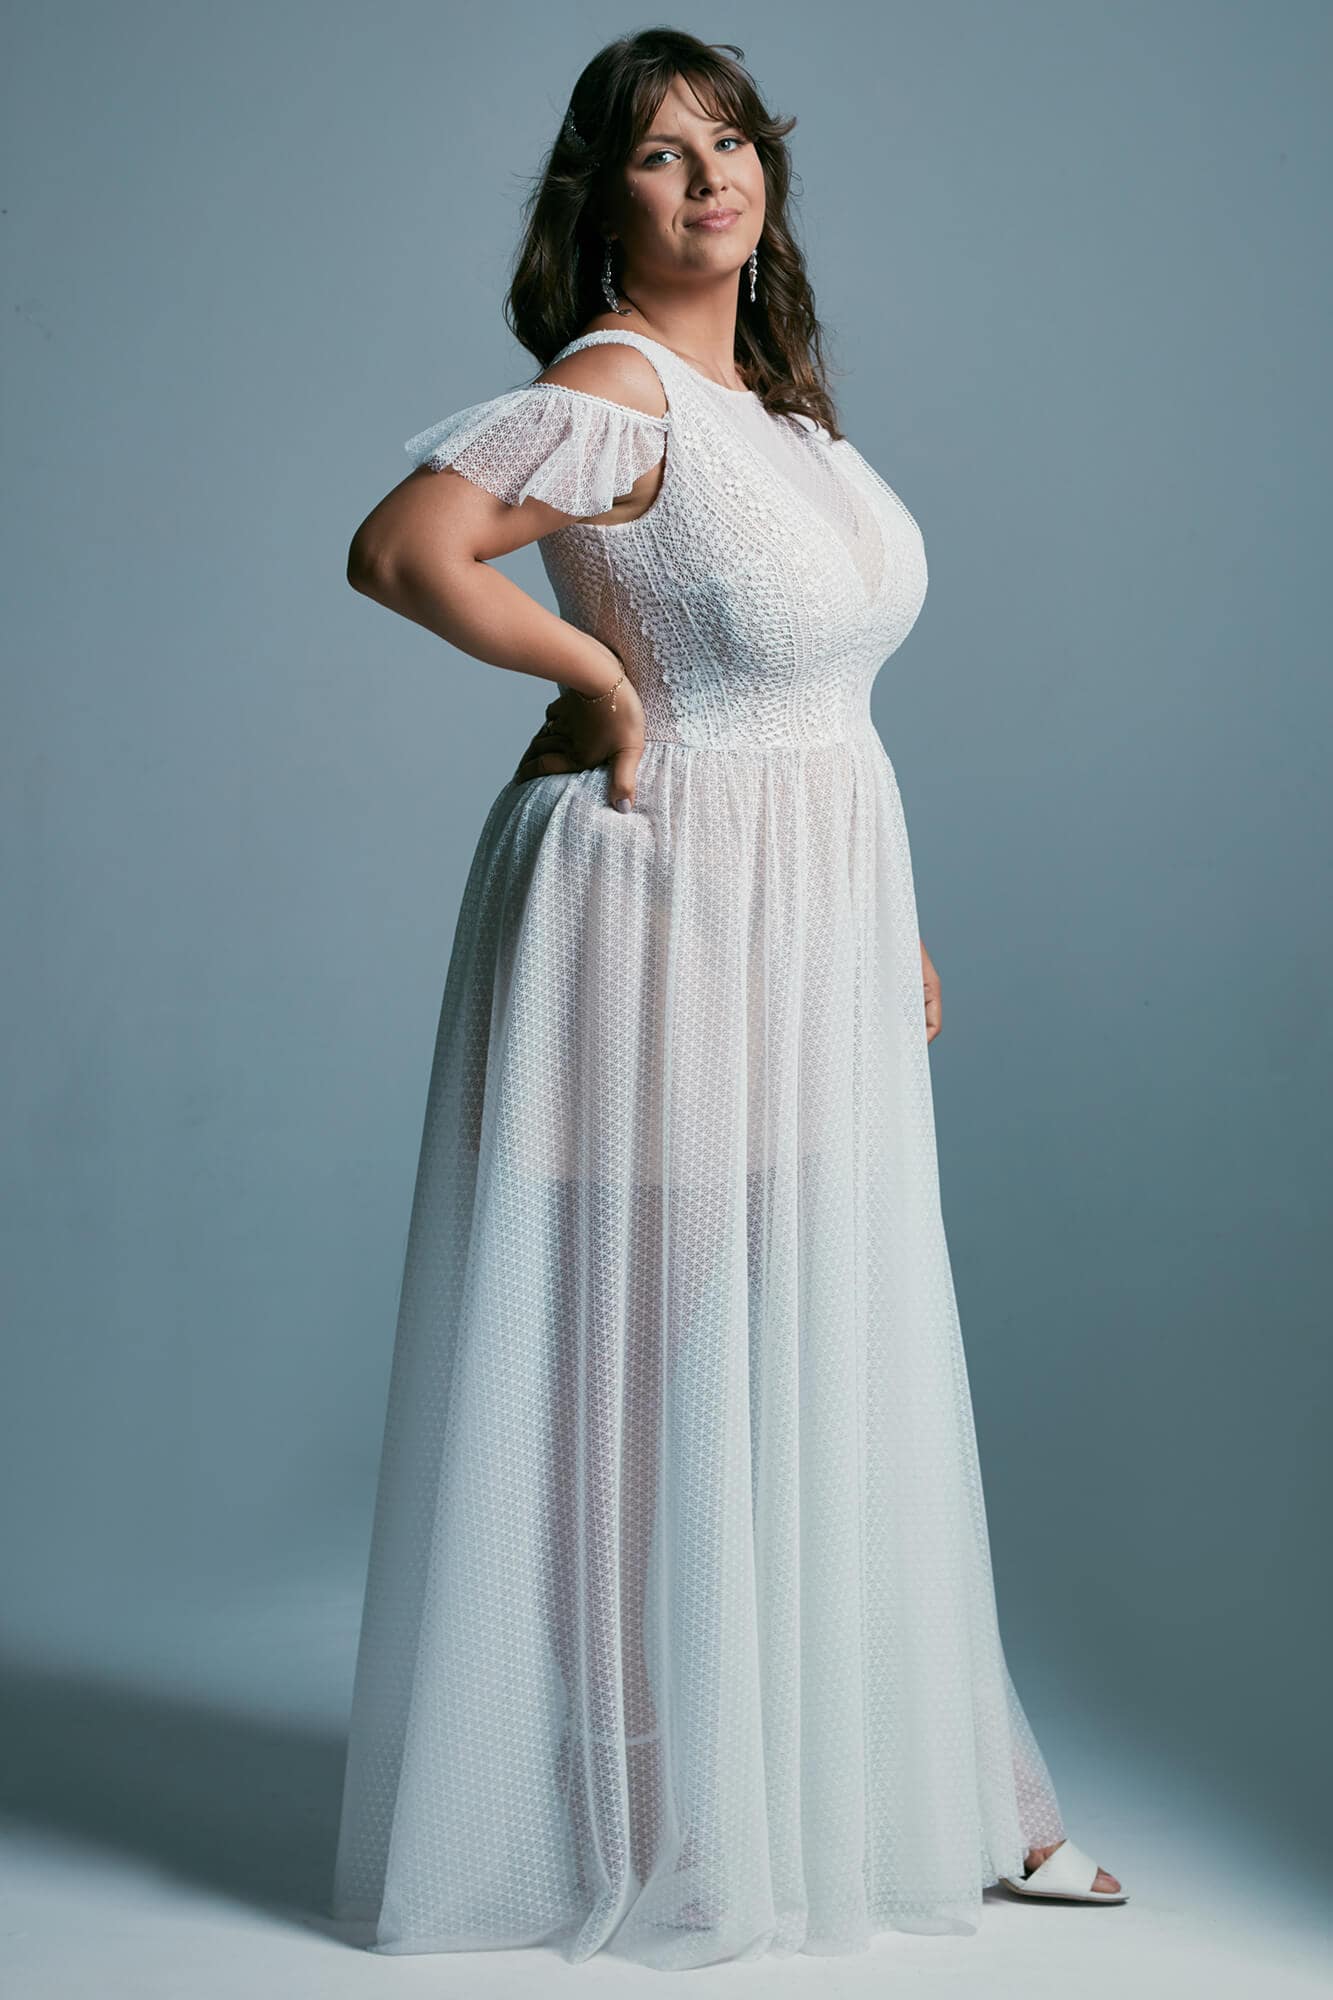 20 Stunning Size-Inclusive Wedding Dresses BridalGuide